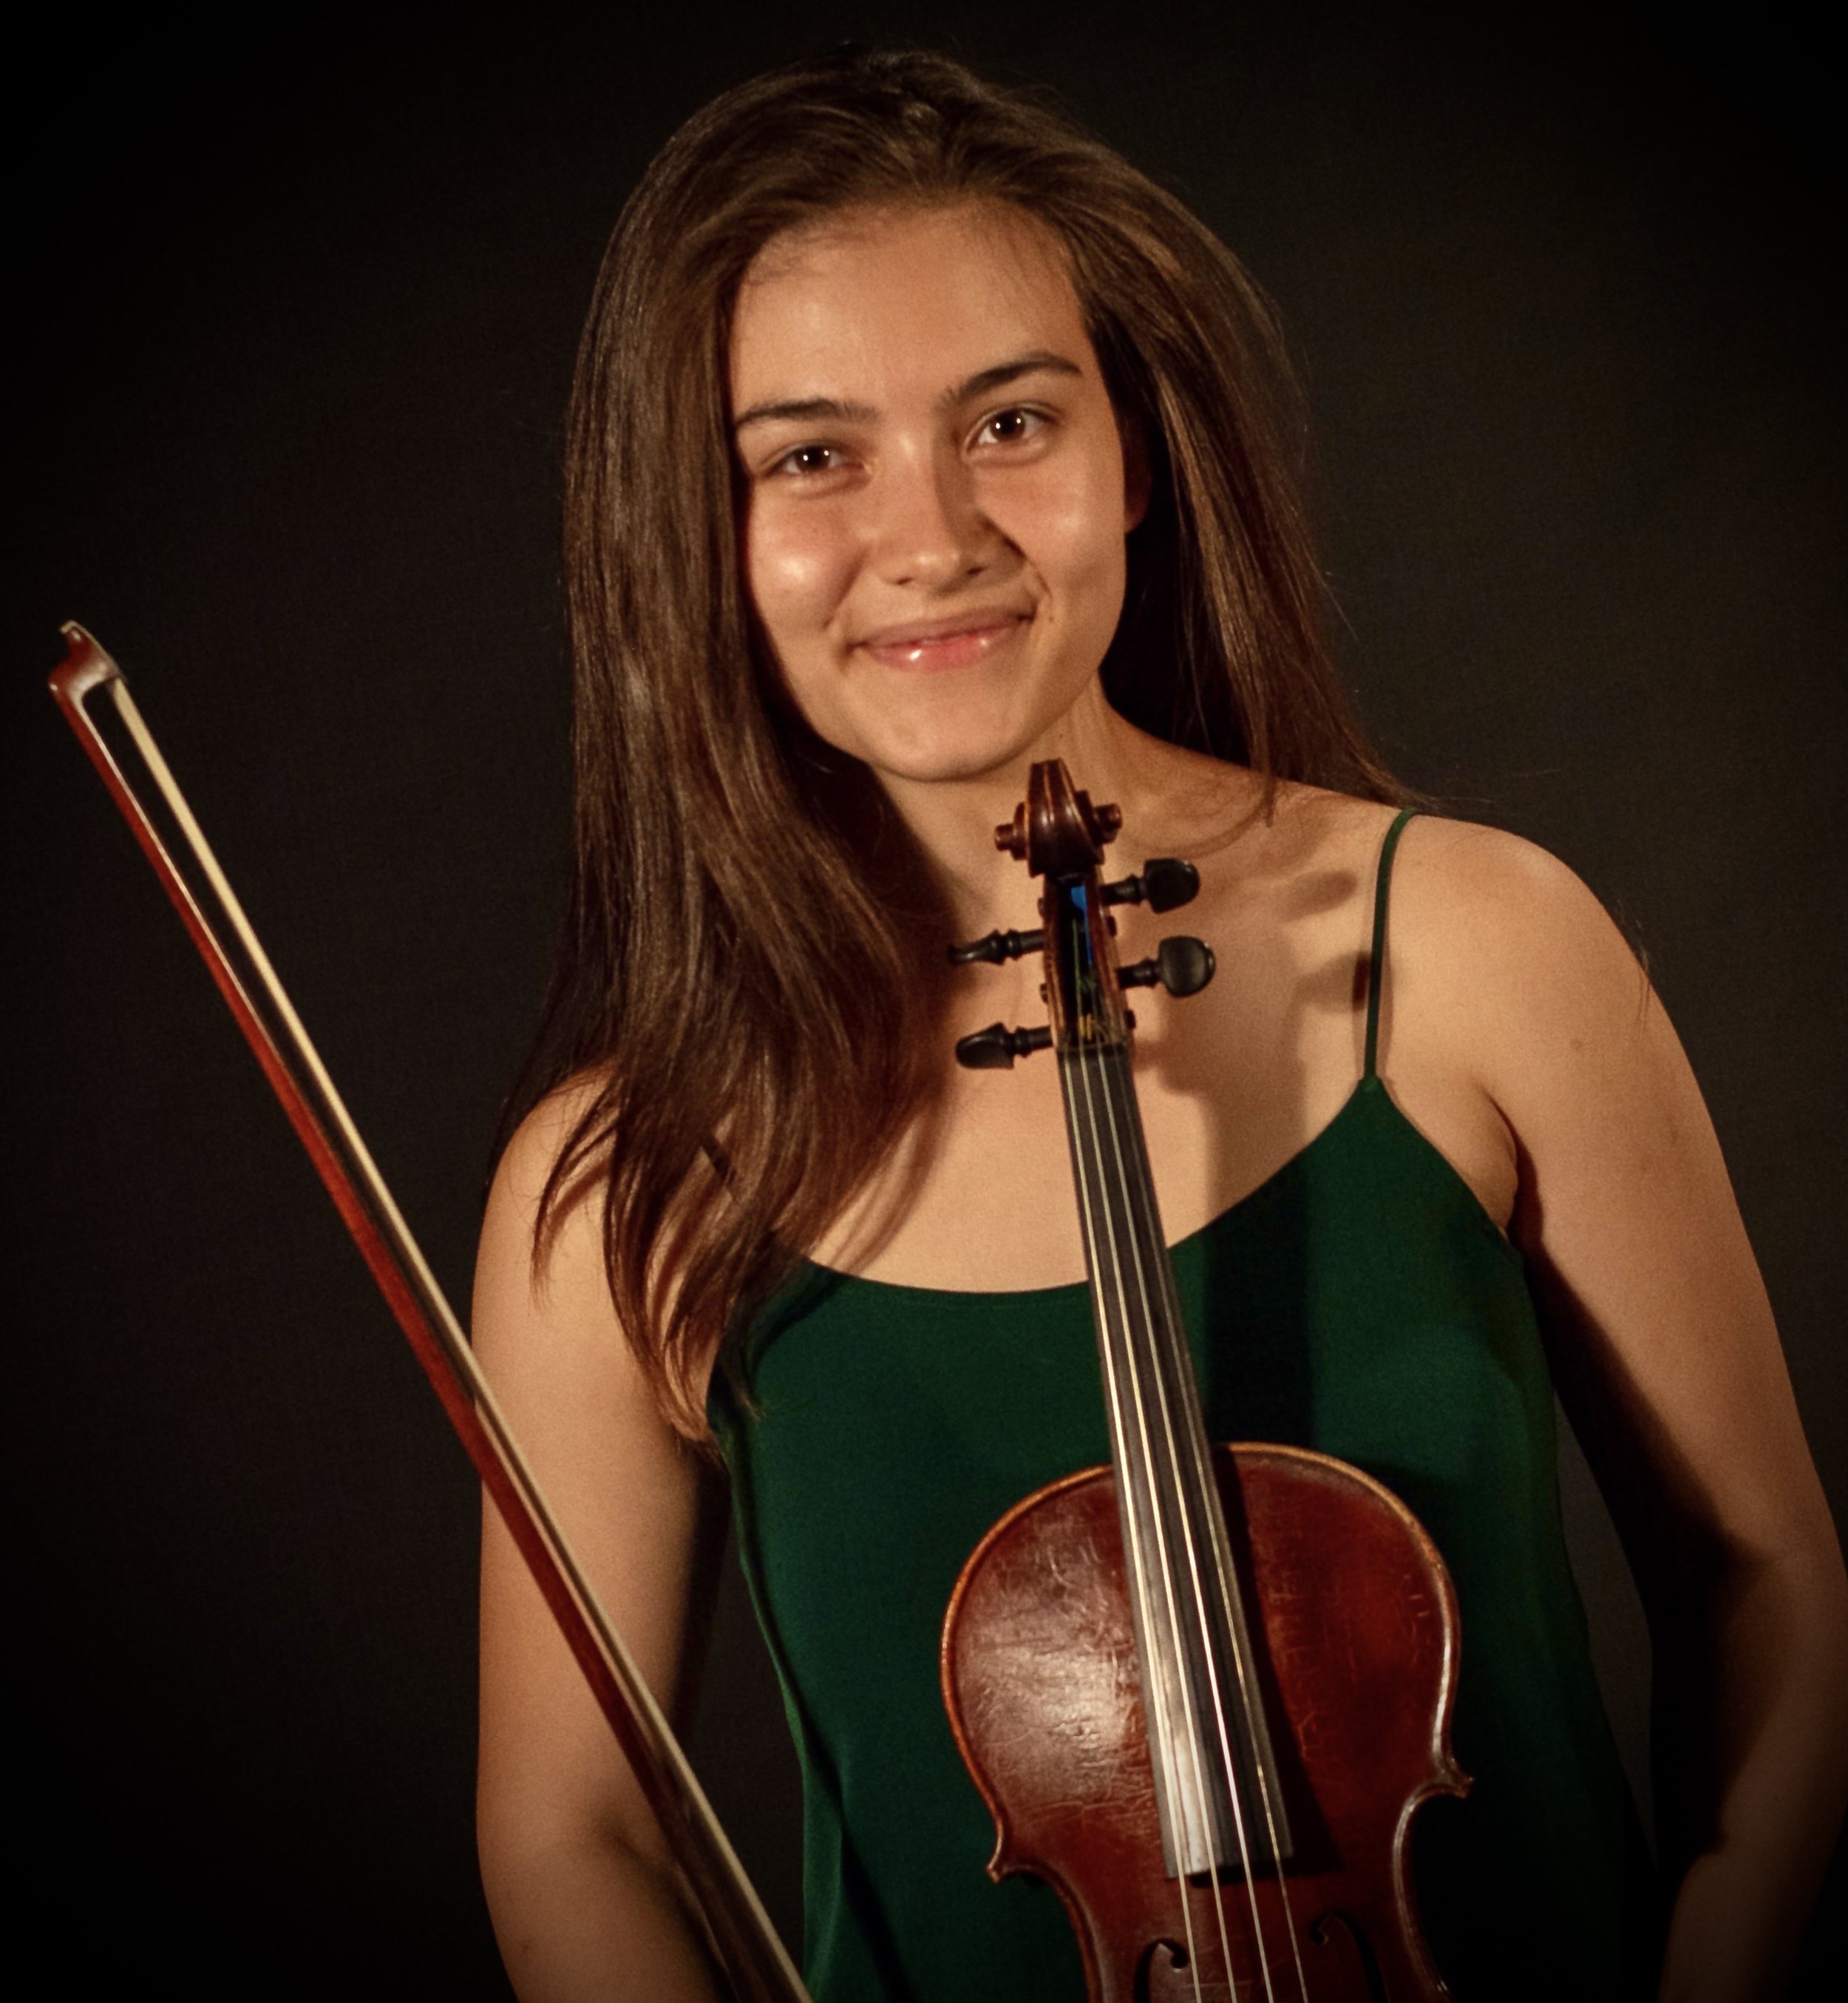 Erina Buchholz, Concertmaster